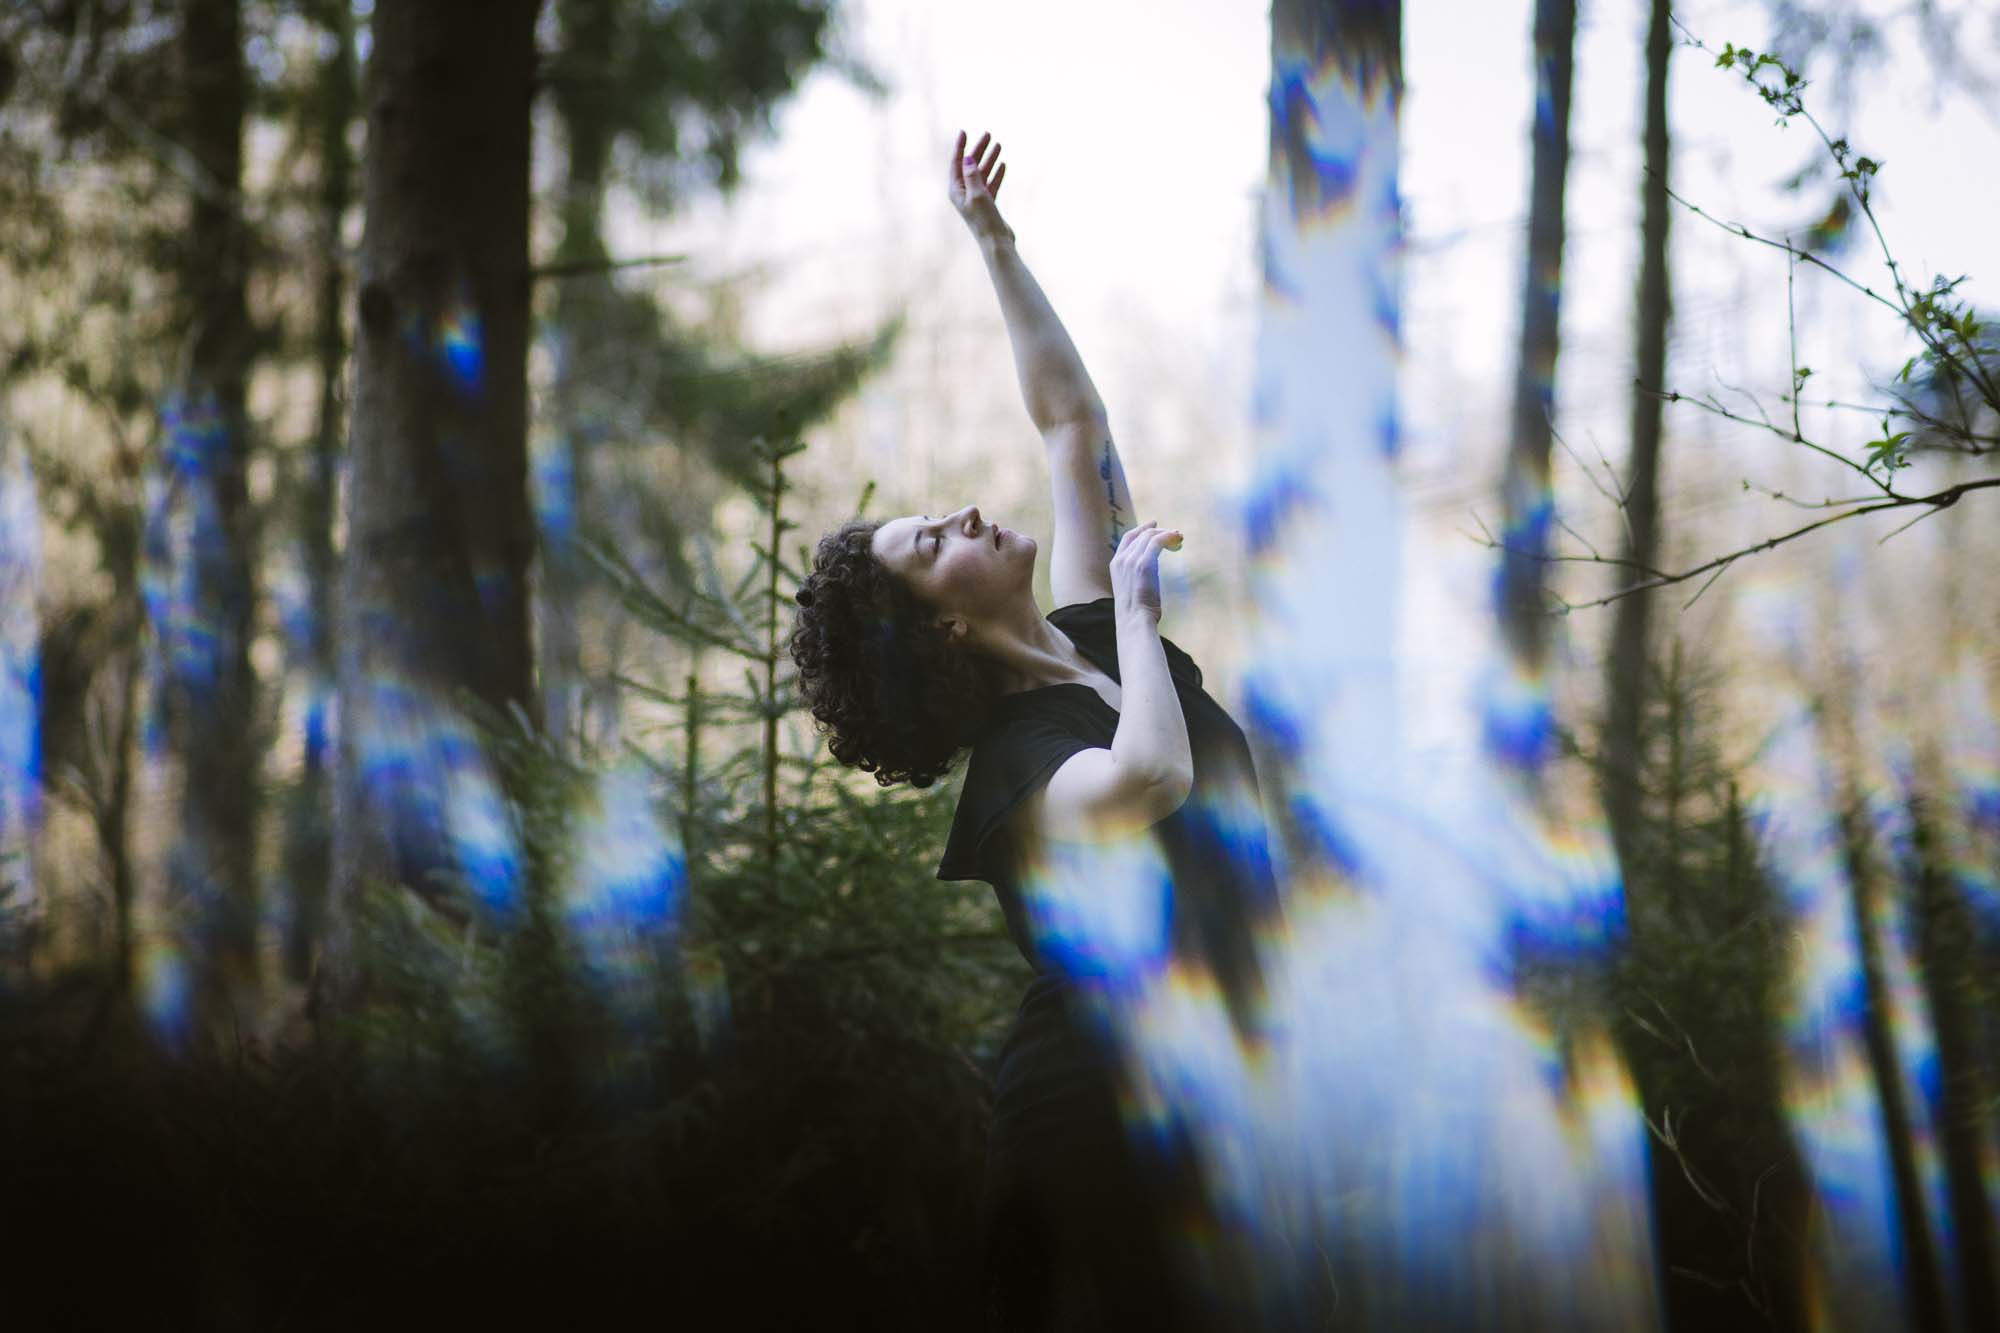 Dancing in the woods - Fotografin Rosa Engel